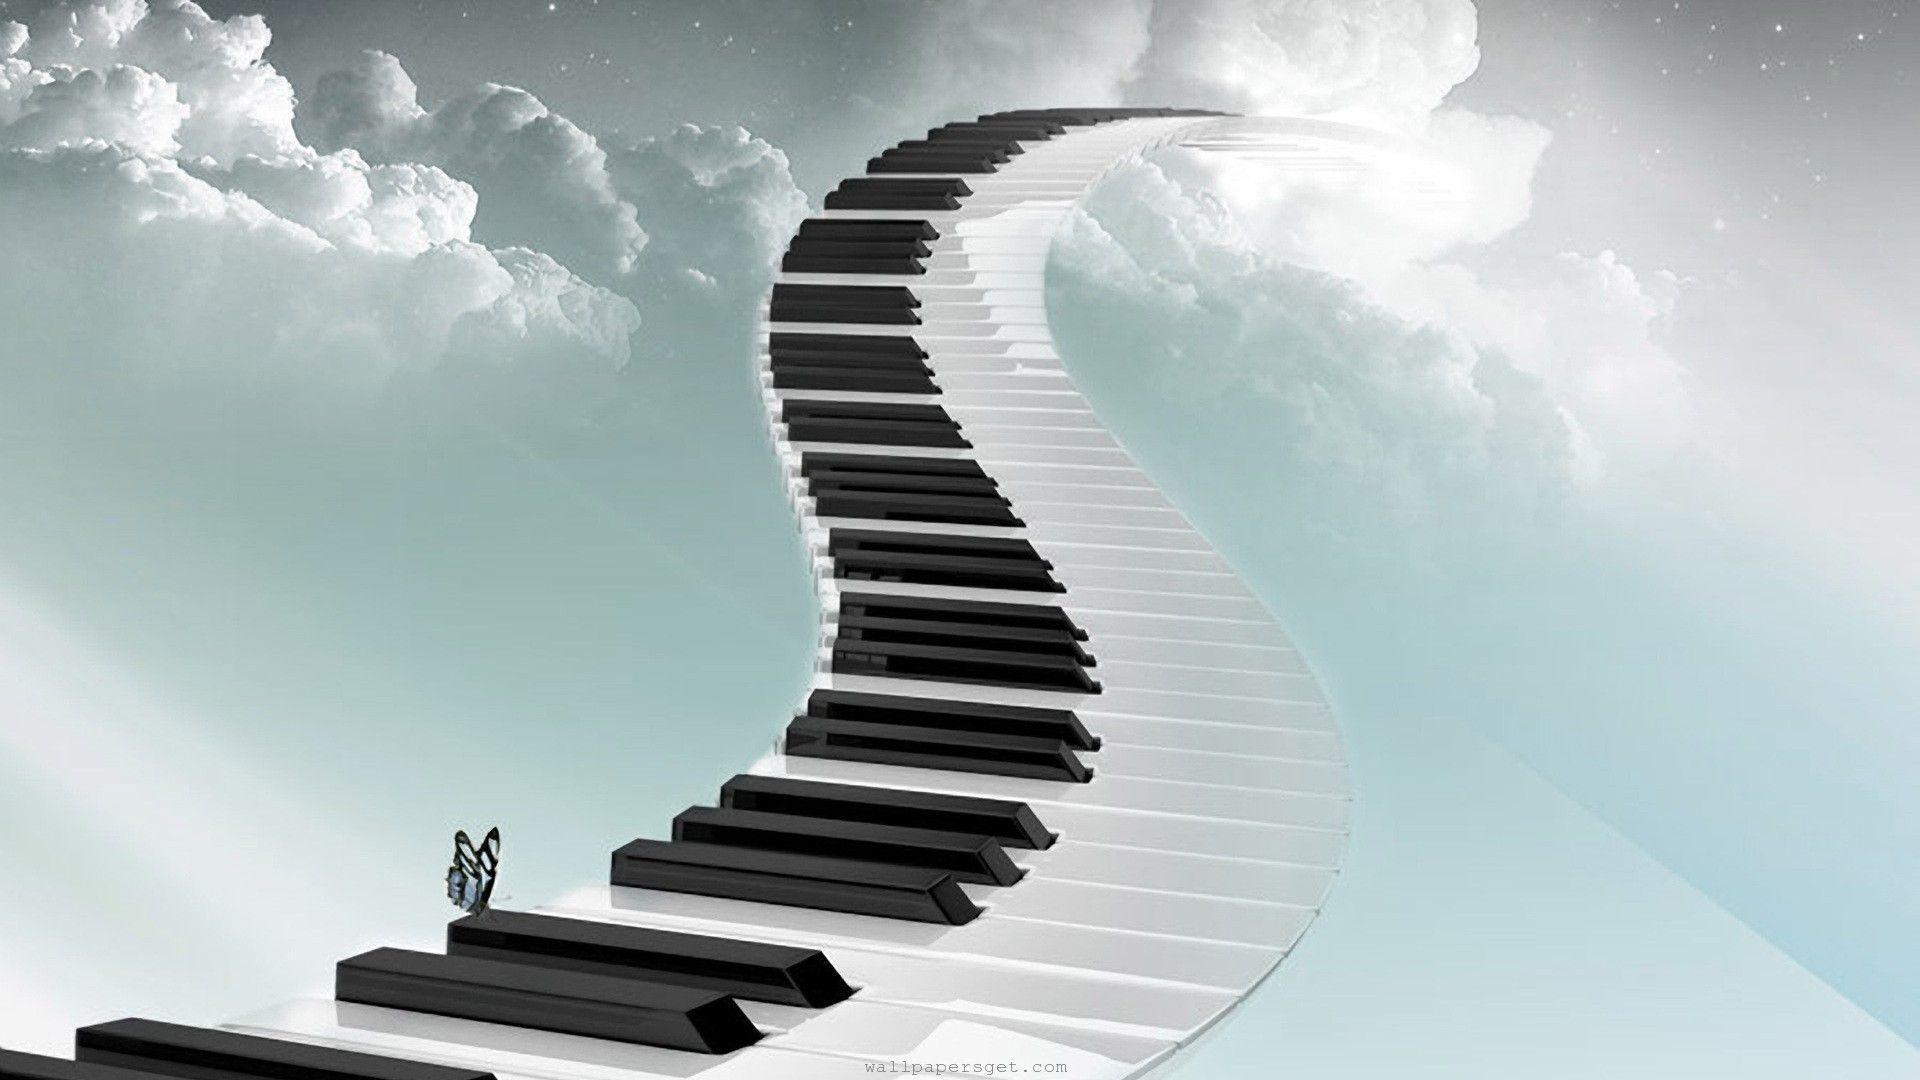 Music Keyboard To Heaven HD Image Wallpaper Image